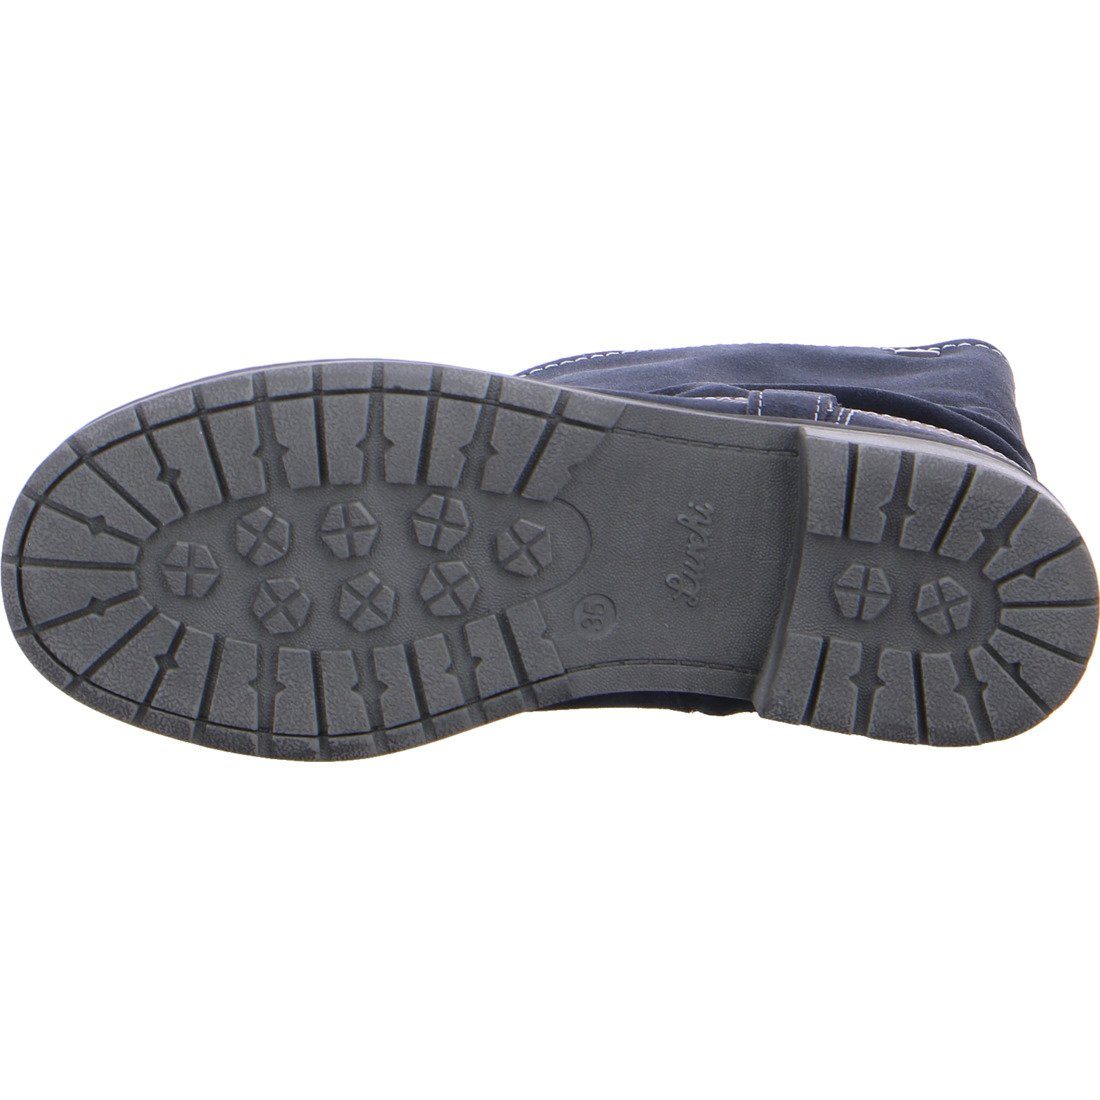 Rauleder Lurchi Lurchi Lia-Tex grün Stiefel - Stiefel 037520 Schuhe,